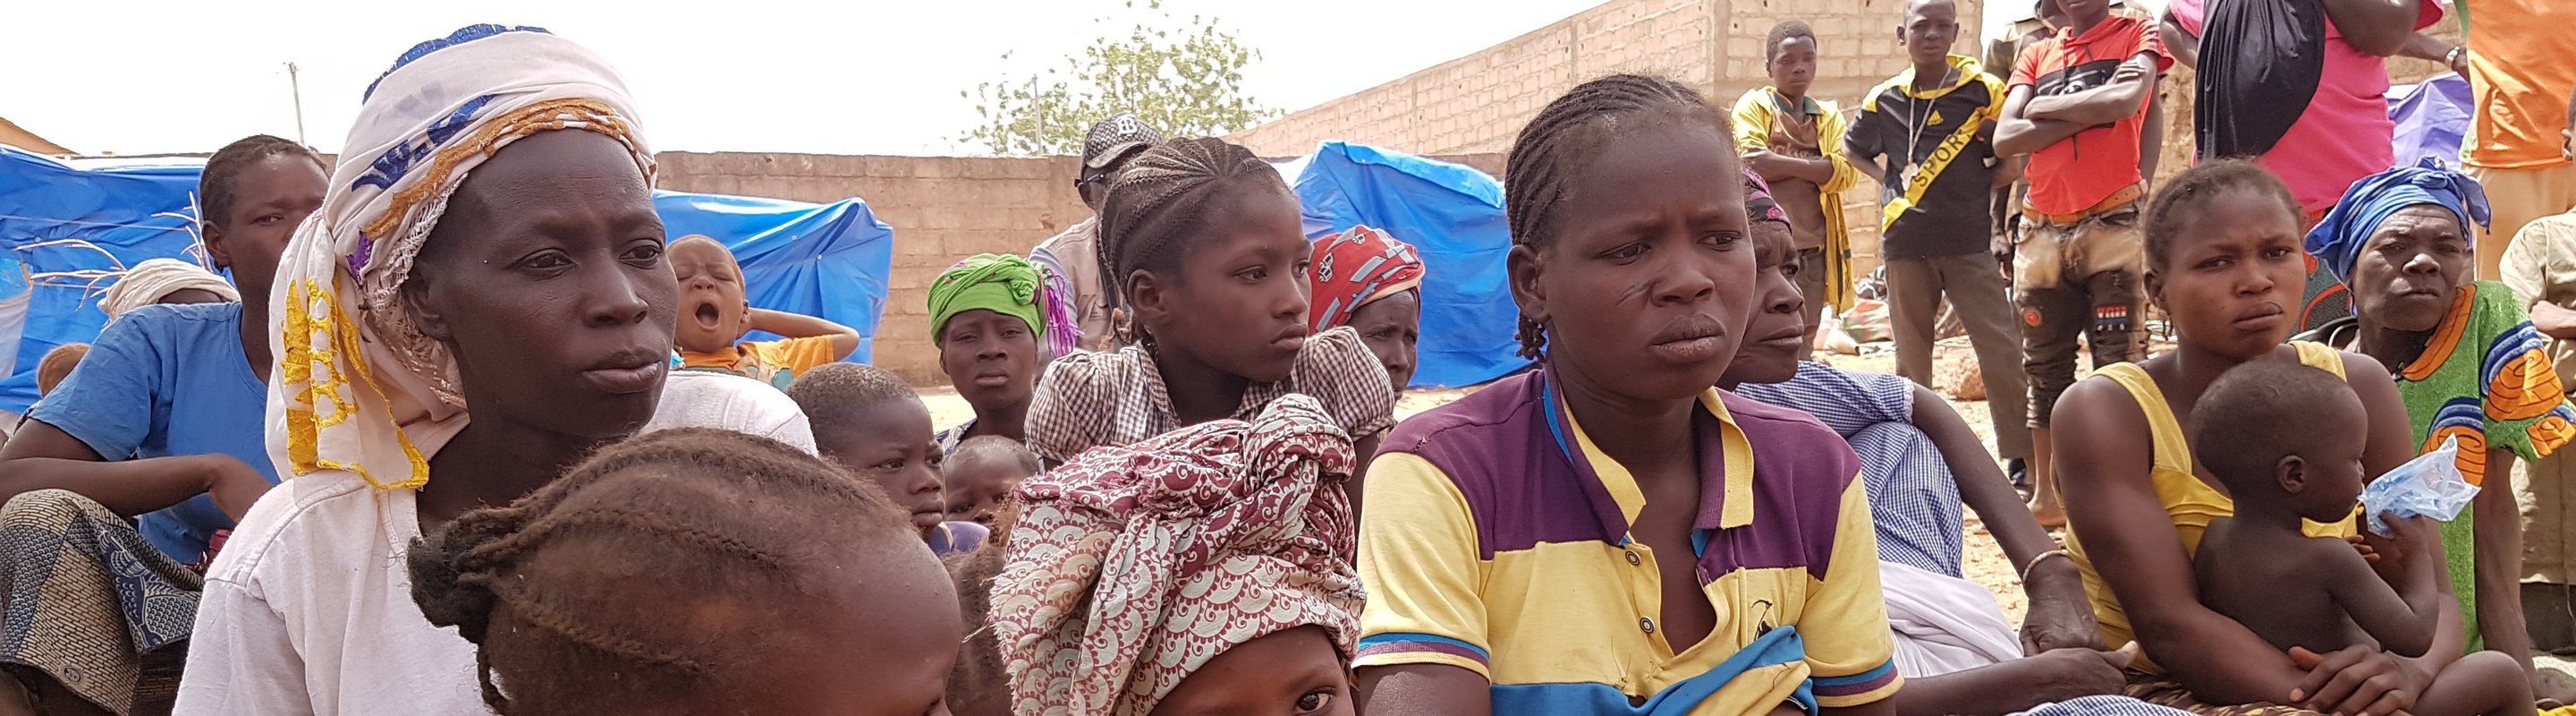 Geflüchtete Familien in Burkina Faso 